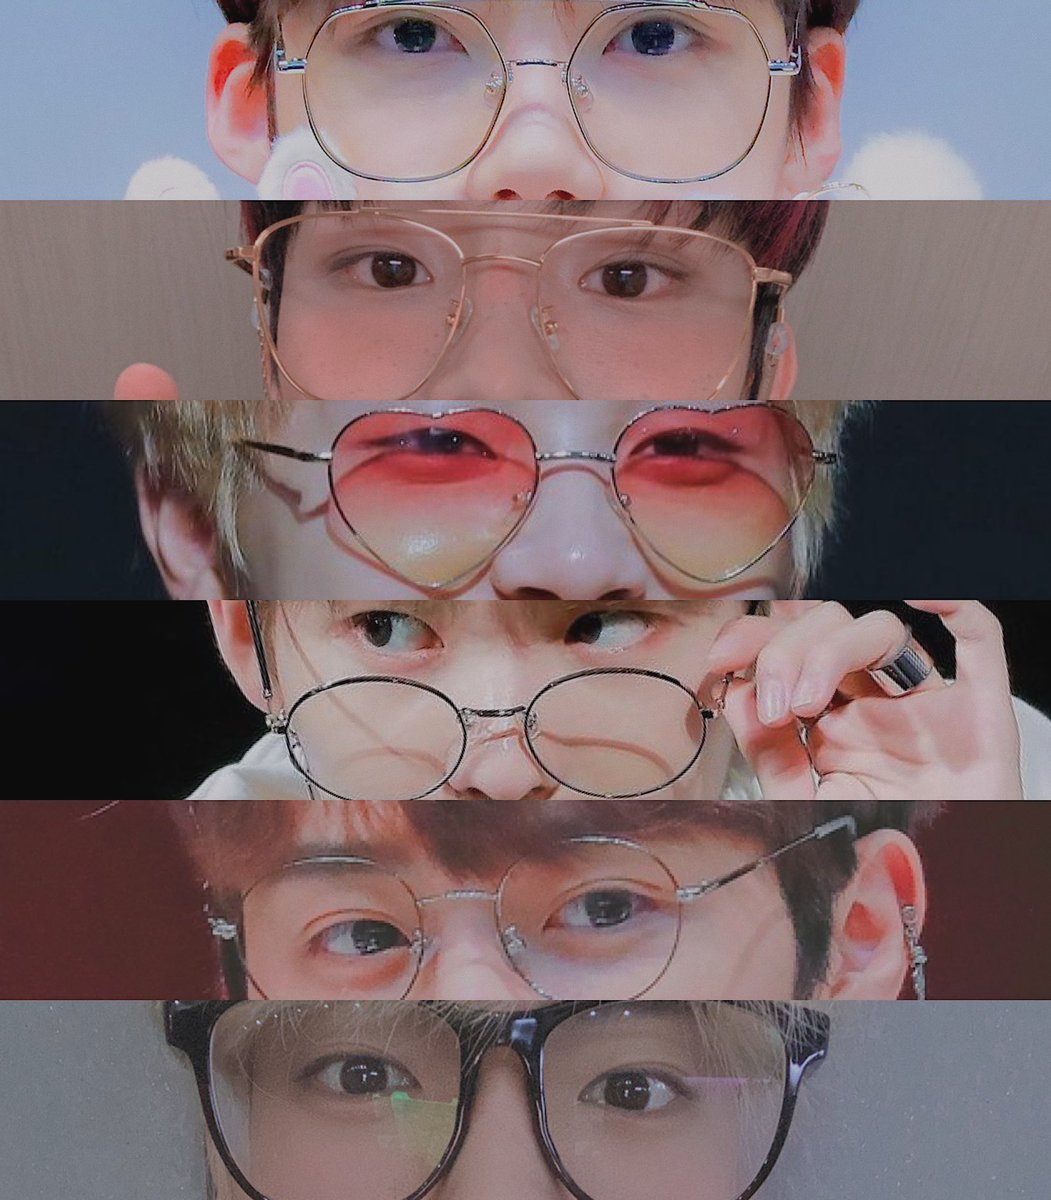 ˗ˏˋ ✦ the boyz’ glasses ✦ ˎˊ˗